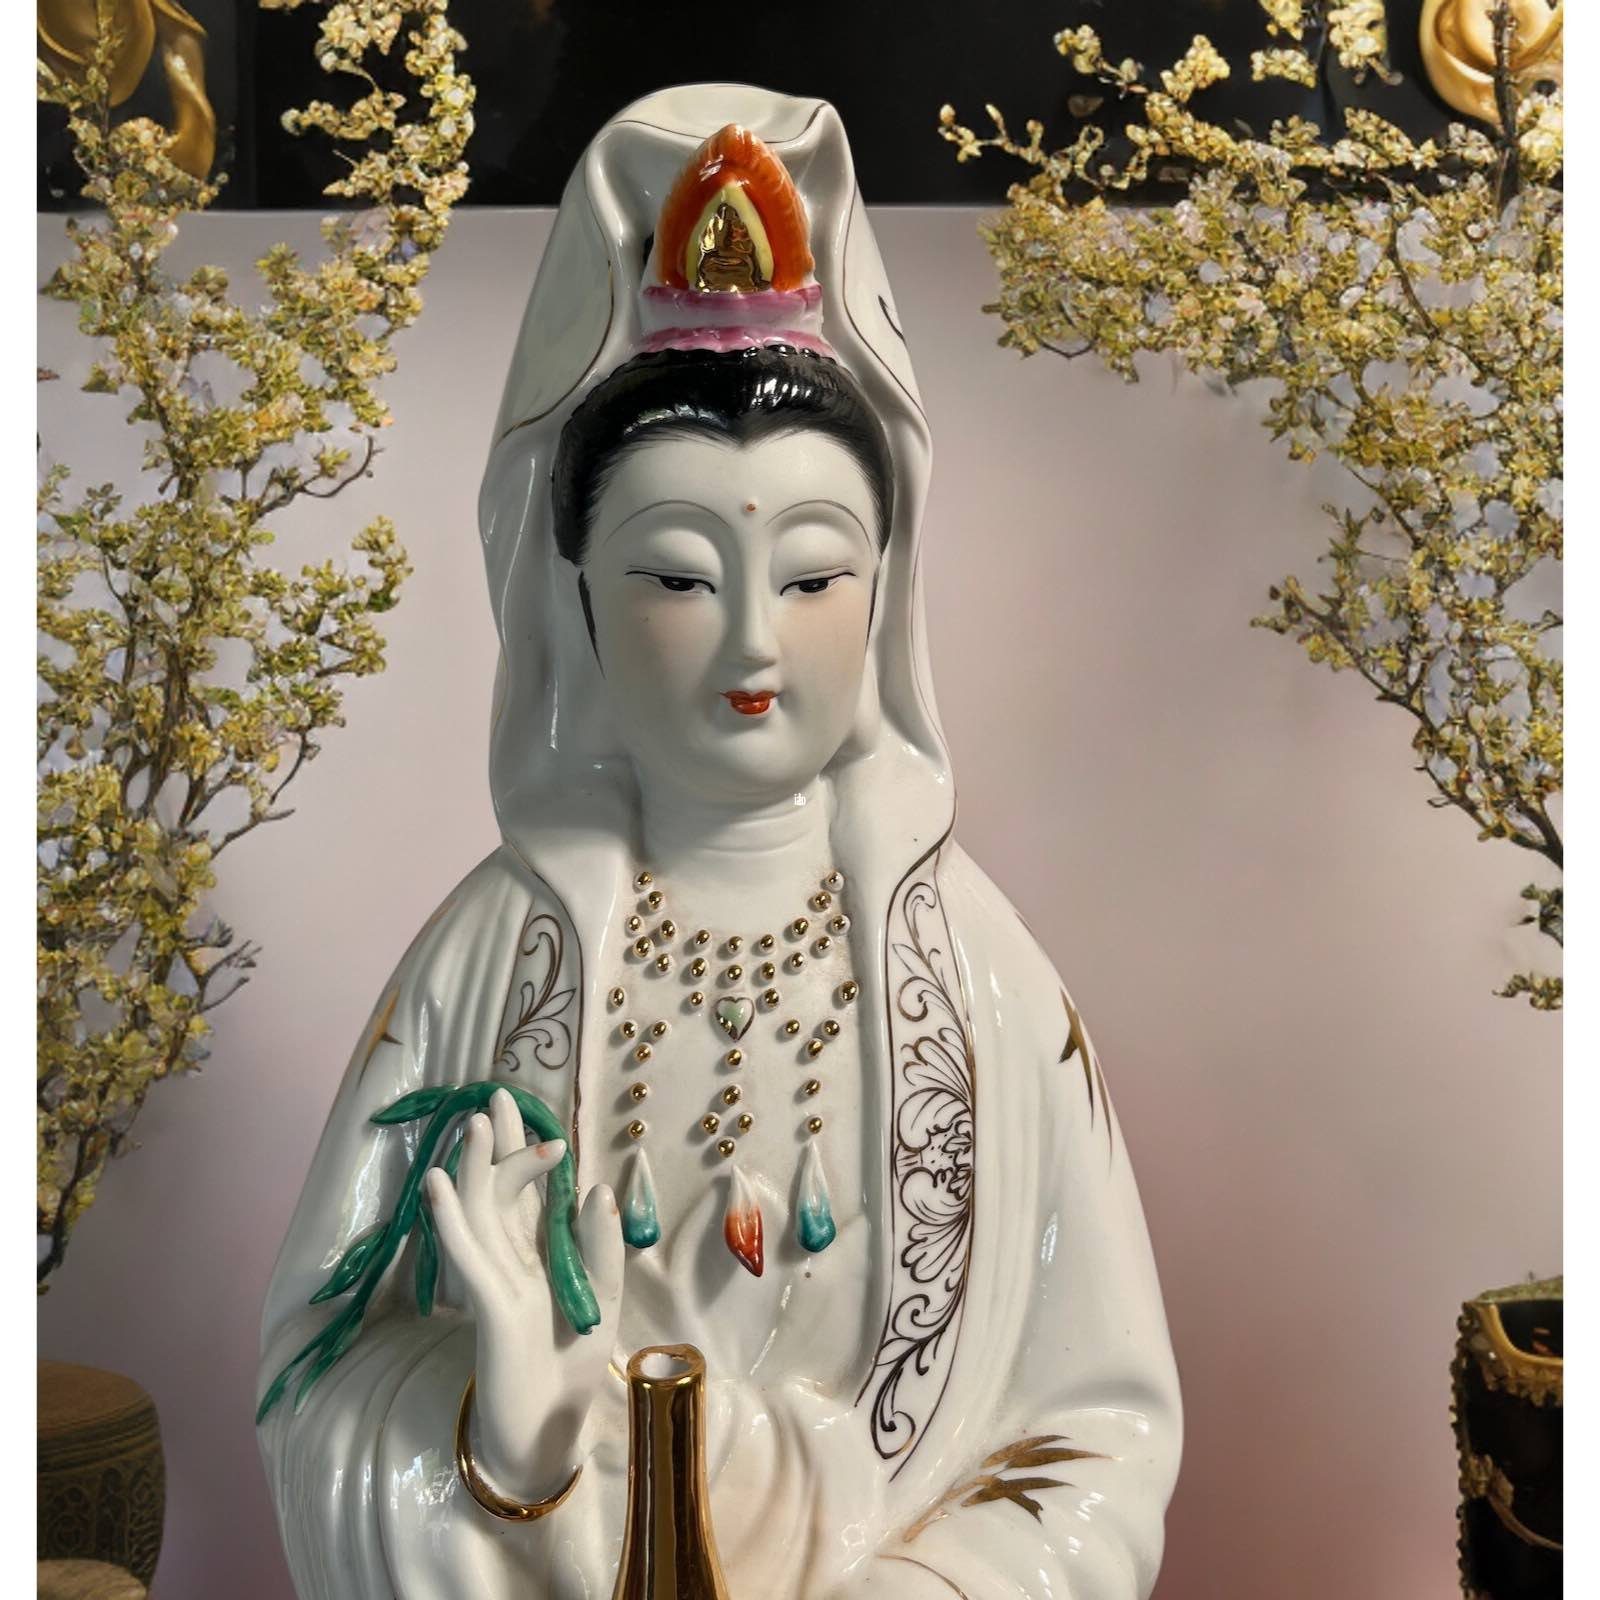 Figur 66 Kwan-Yin groß Porzellan aus cm LifeStyle Buddha Buddhafigur Asien